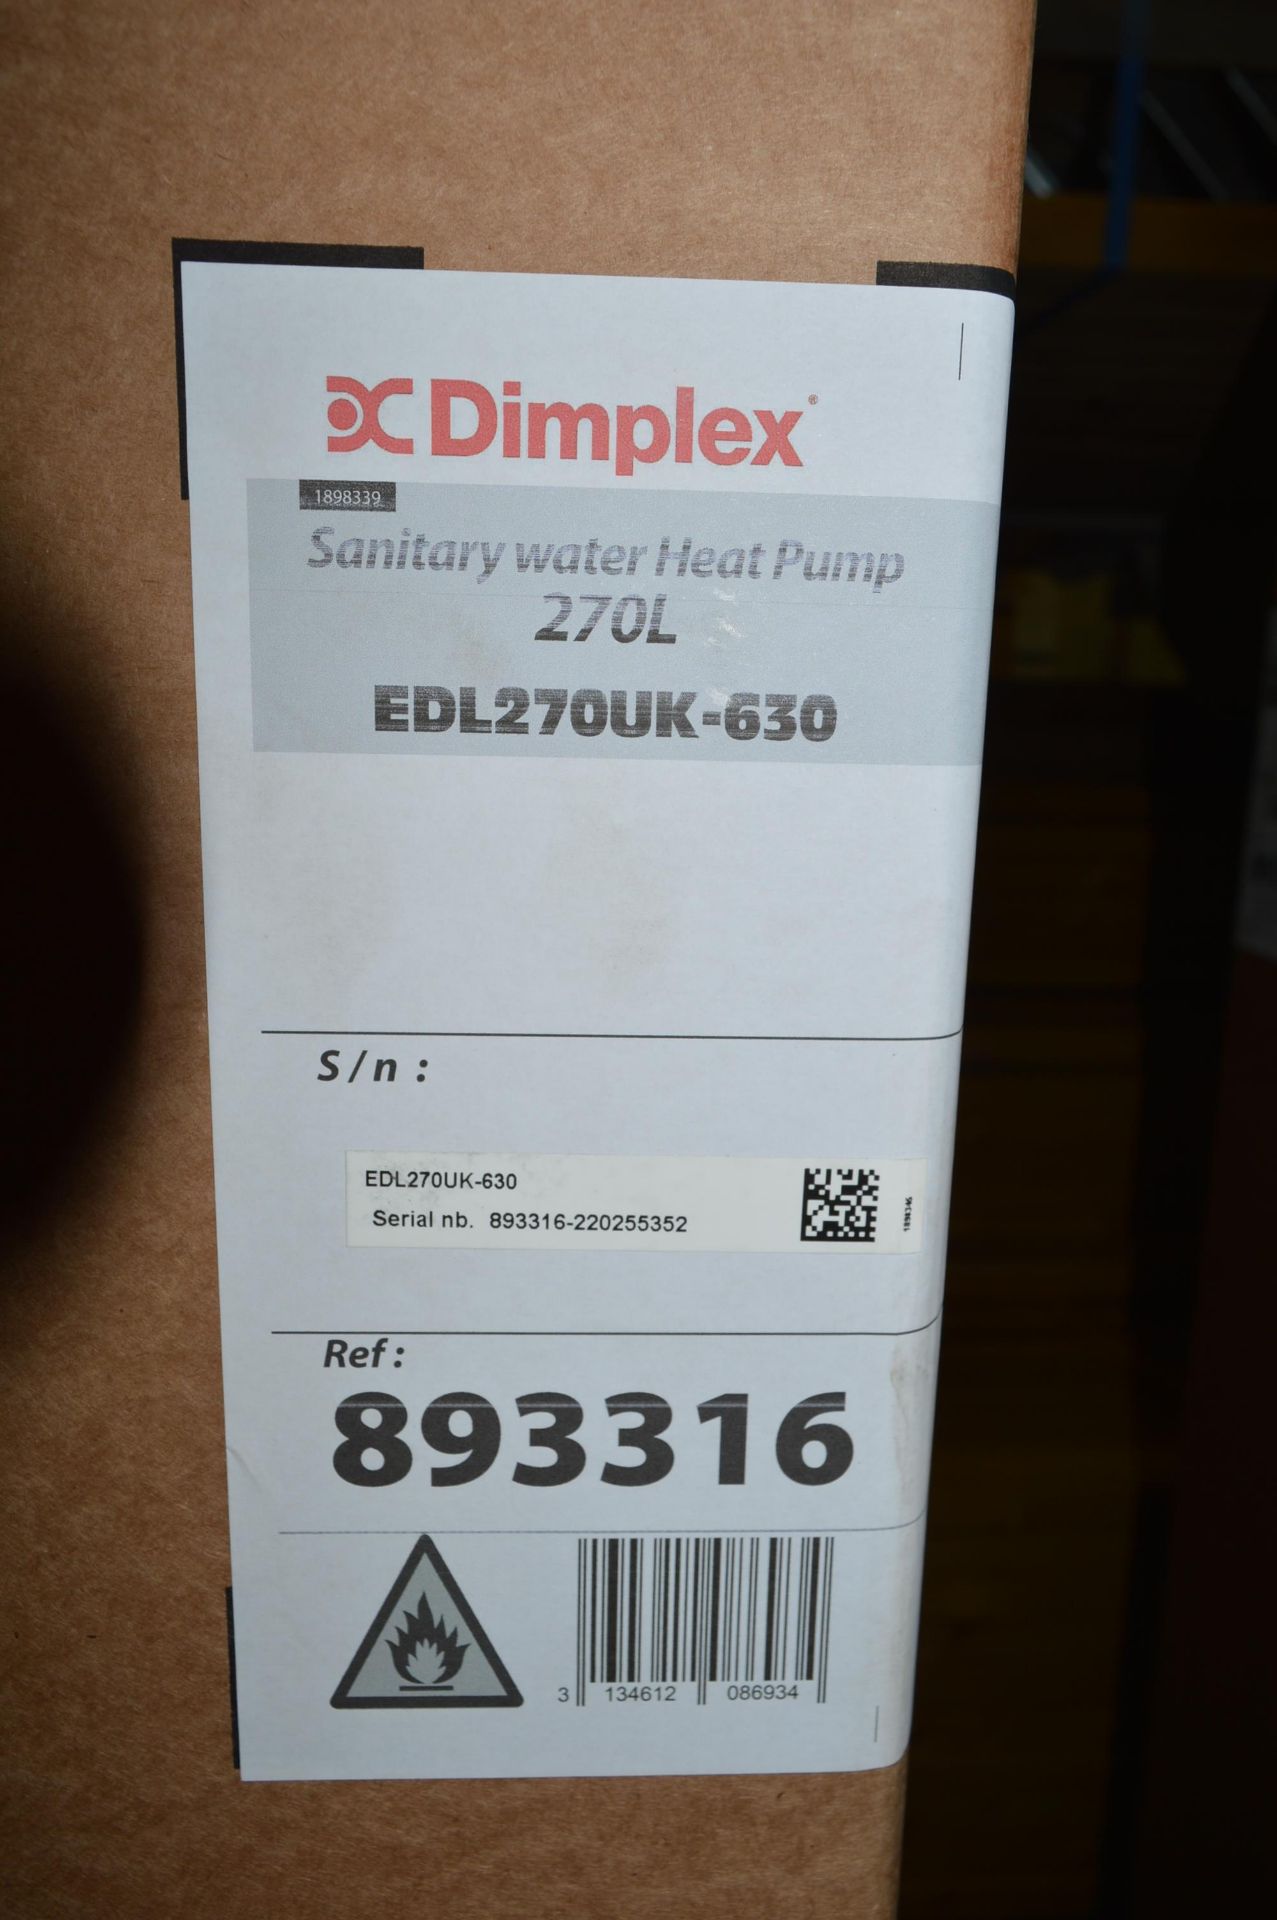 Dimplex, sanitary water heat pump, 270L, Model EDL270UK-630, Serial No. 893316-220255352 (packaged) - Image 2 of 2